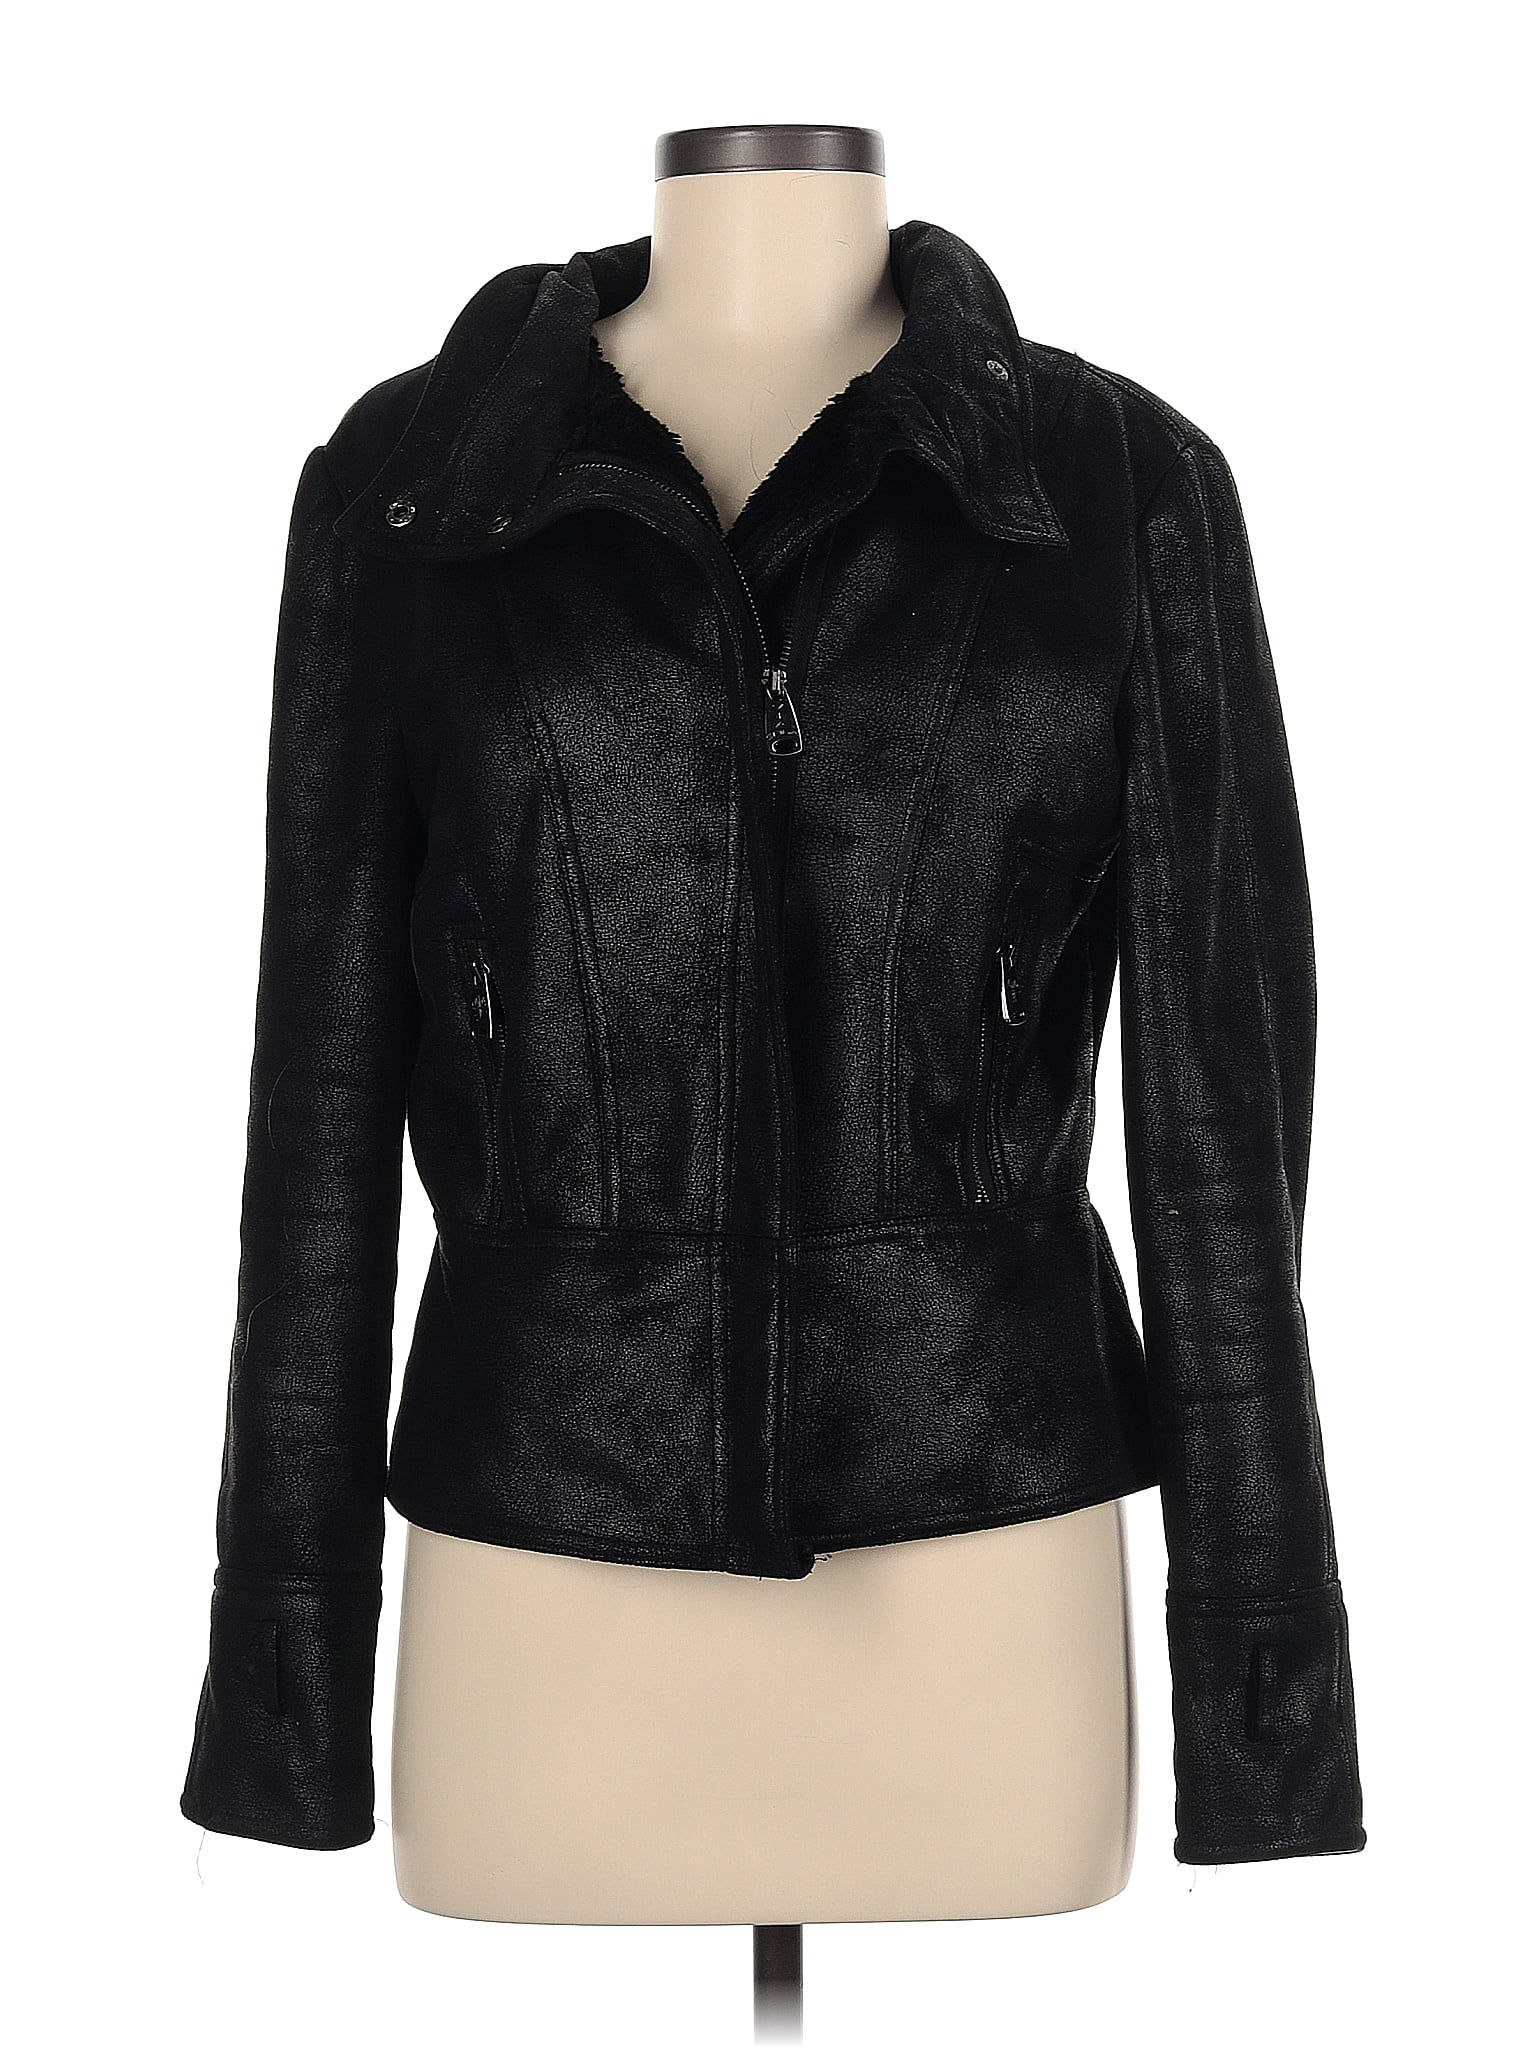 Via Spiga 100% Polyester Black Faux Leather Jacket Size M - 76% off ...